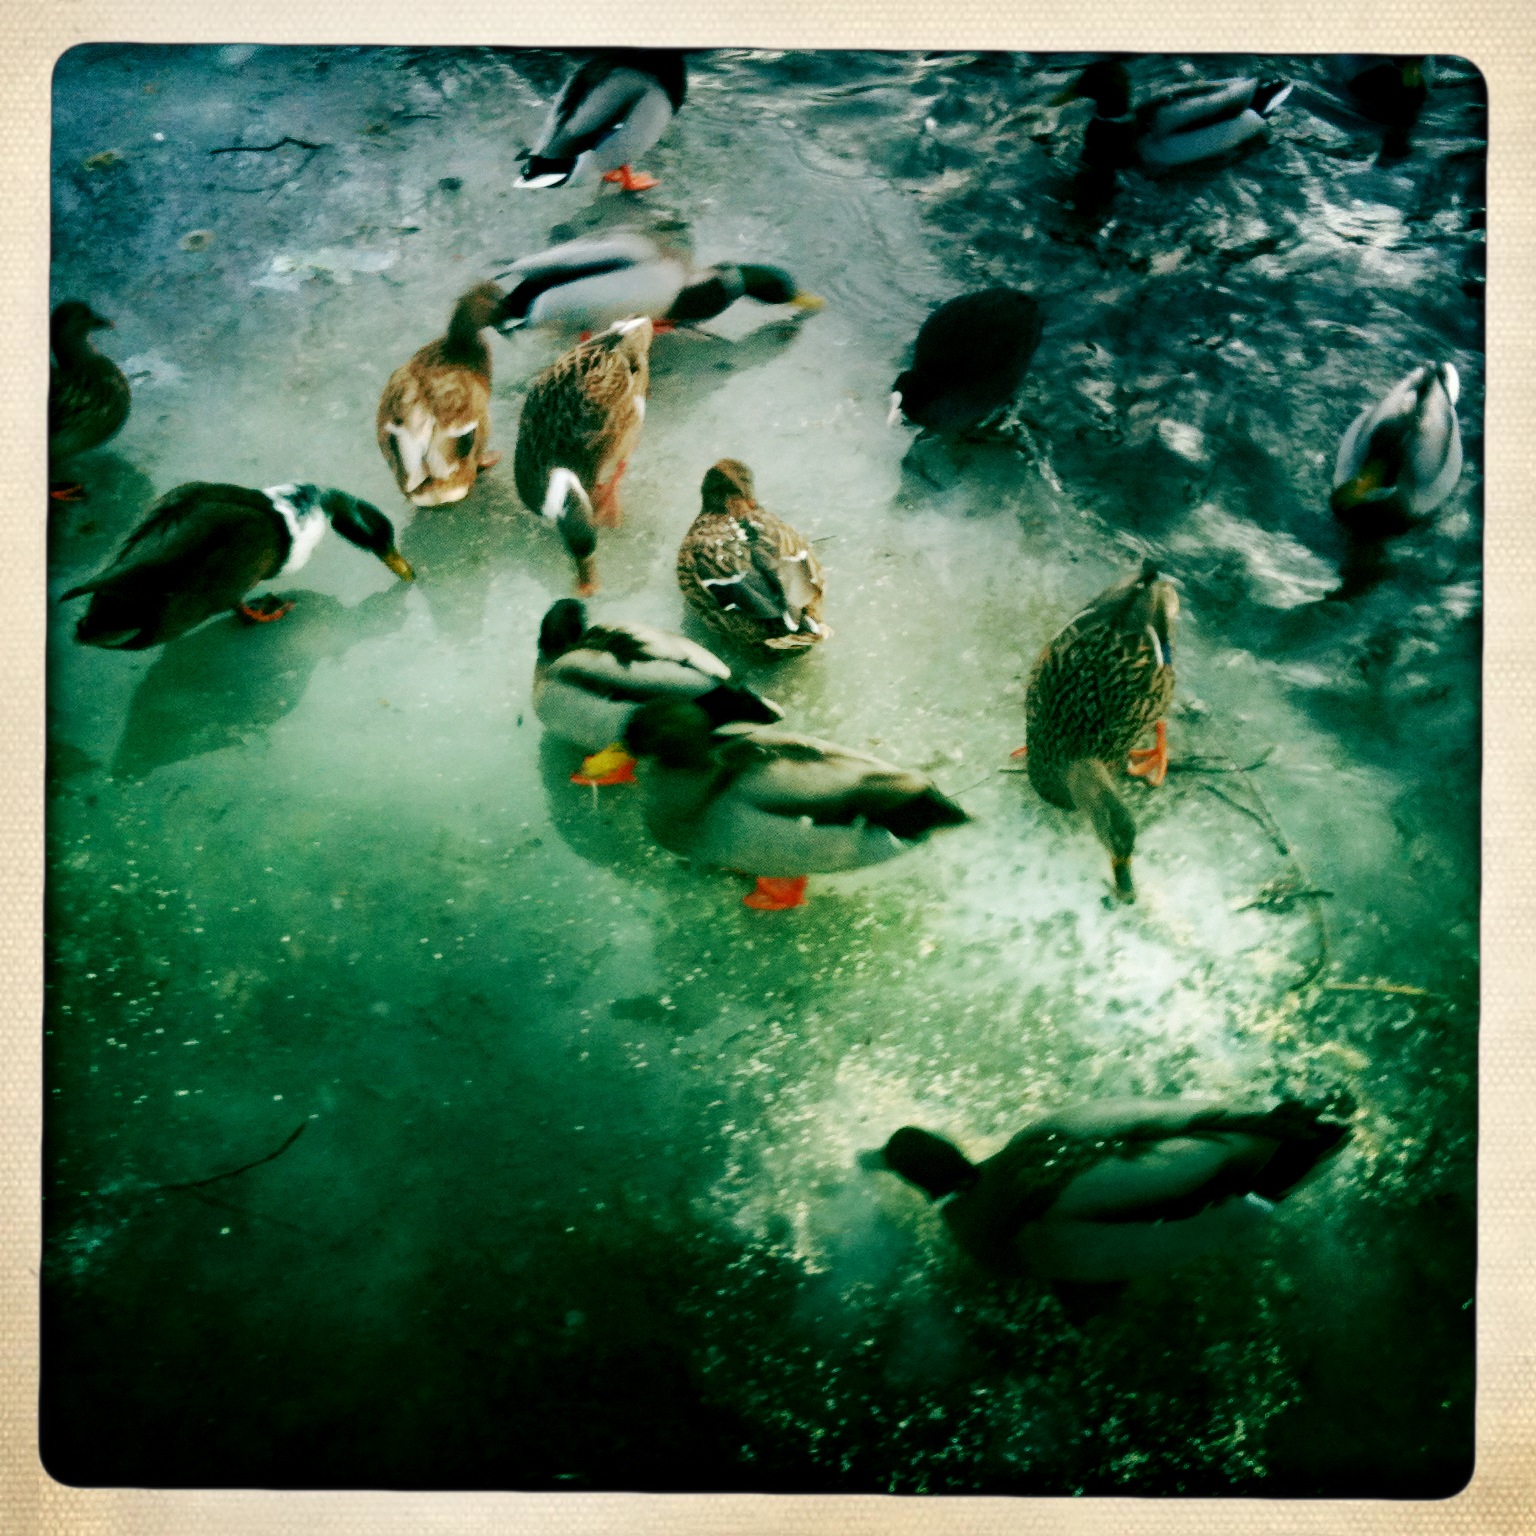 Ice and ducks